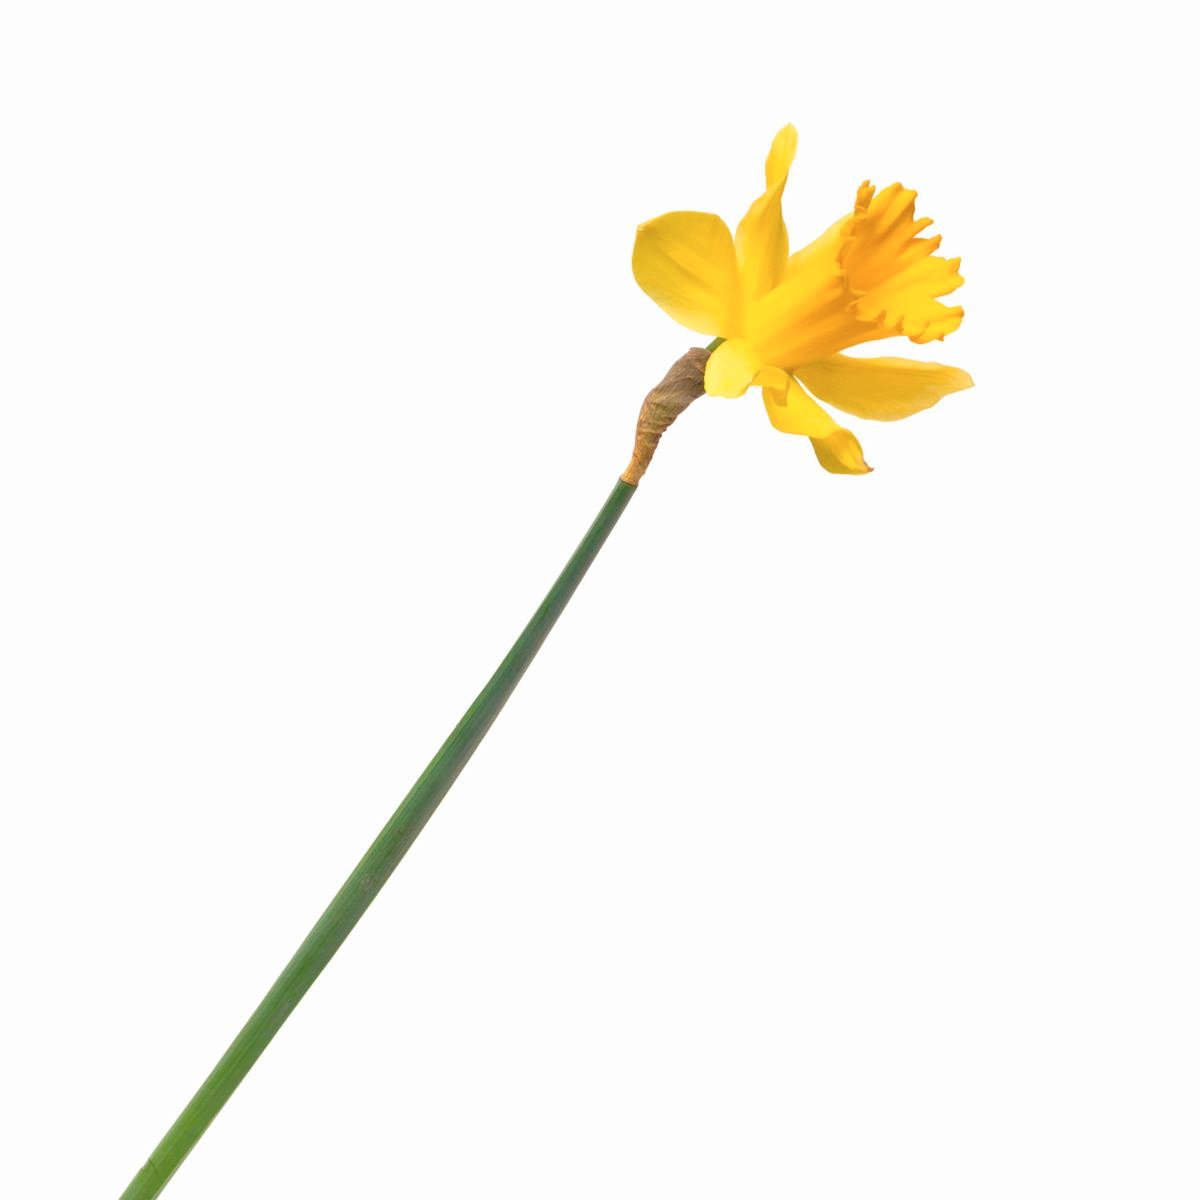 Daffodils Are National Garden Bureau S Bulb Crop Of The Year Lifestyle Bendbulletin Com